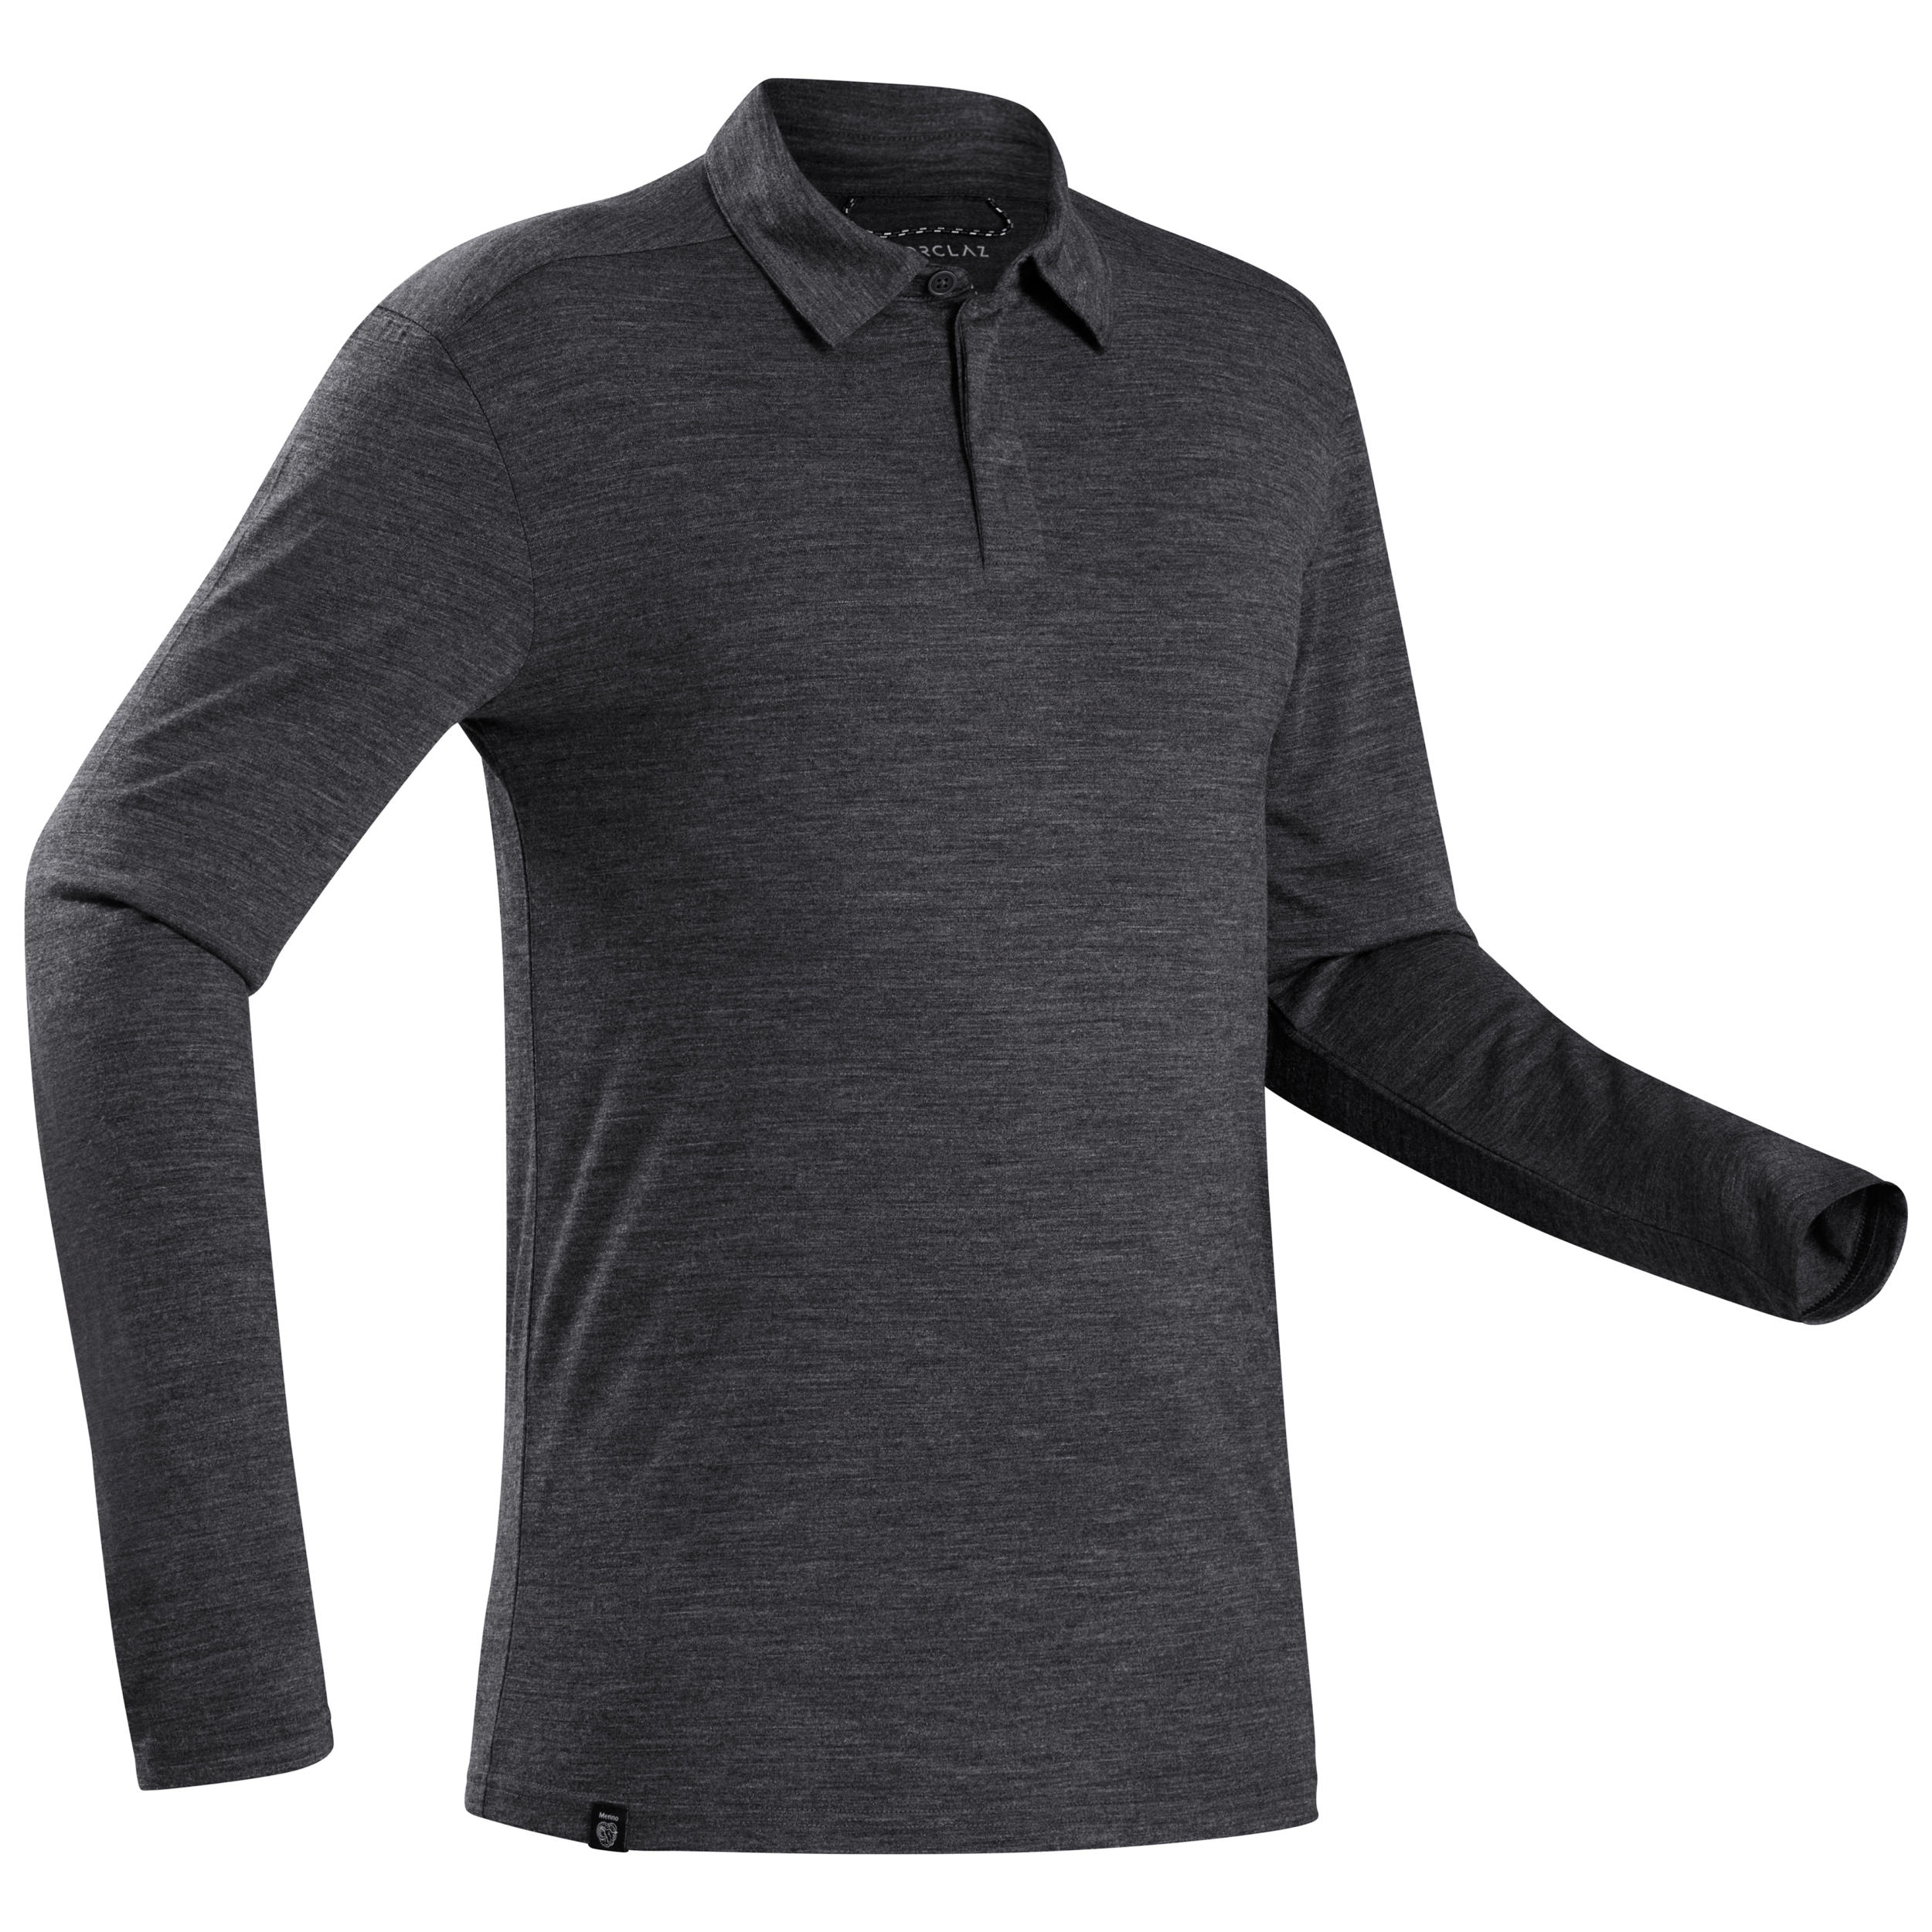 FORCLAZ Men’s Long-sleeved Travel Trekking Merino Wool Polo Shirt - TRAVEL 500 Grey